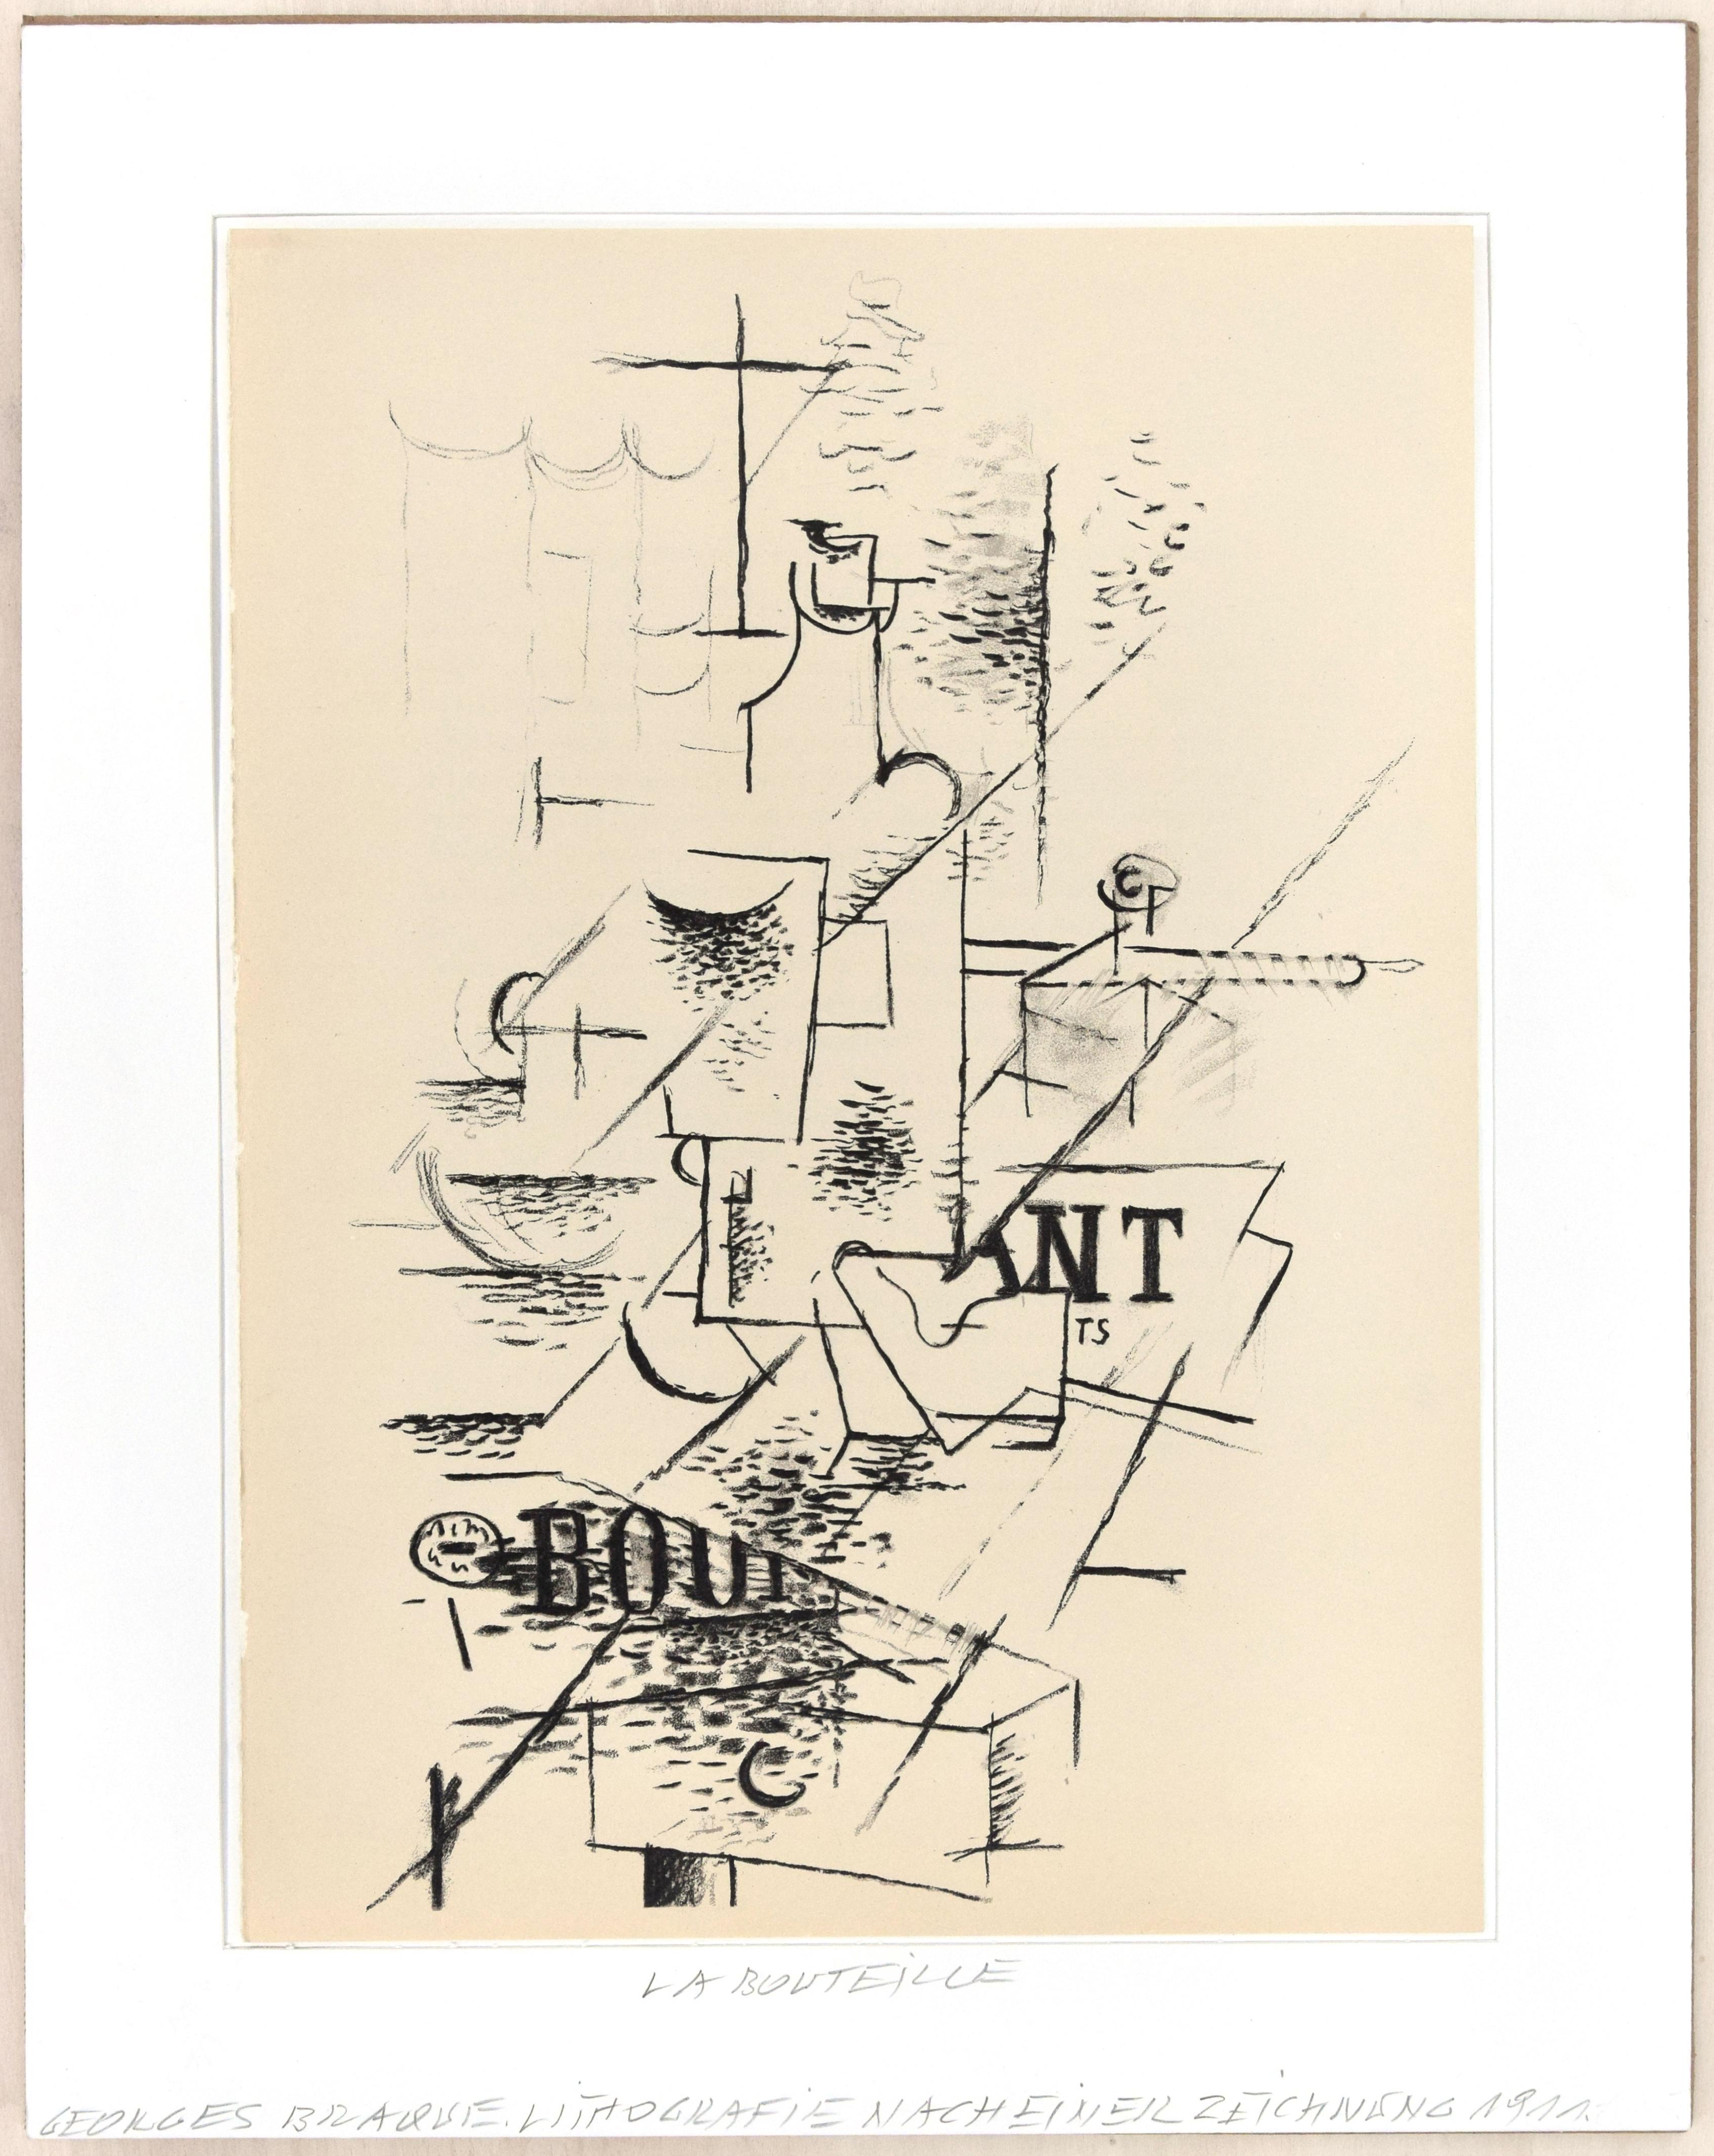 La Bouteille - Georges Braque - Lithograph - Modern 1